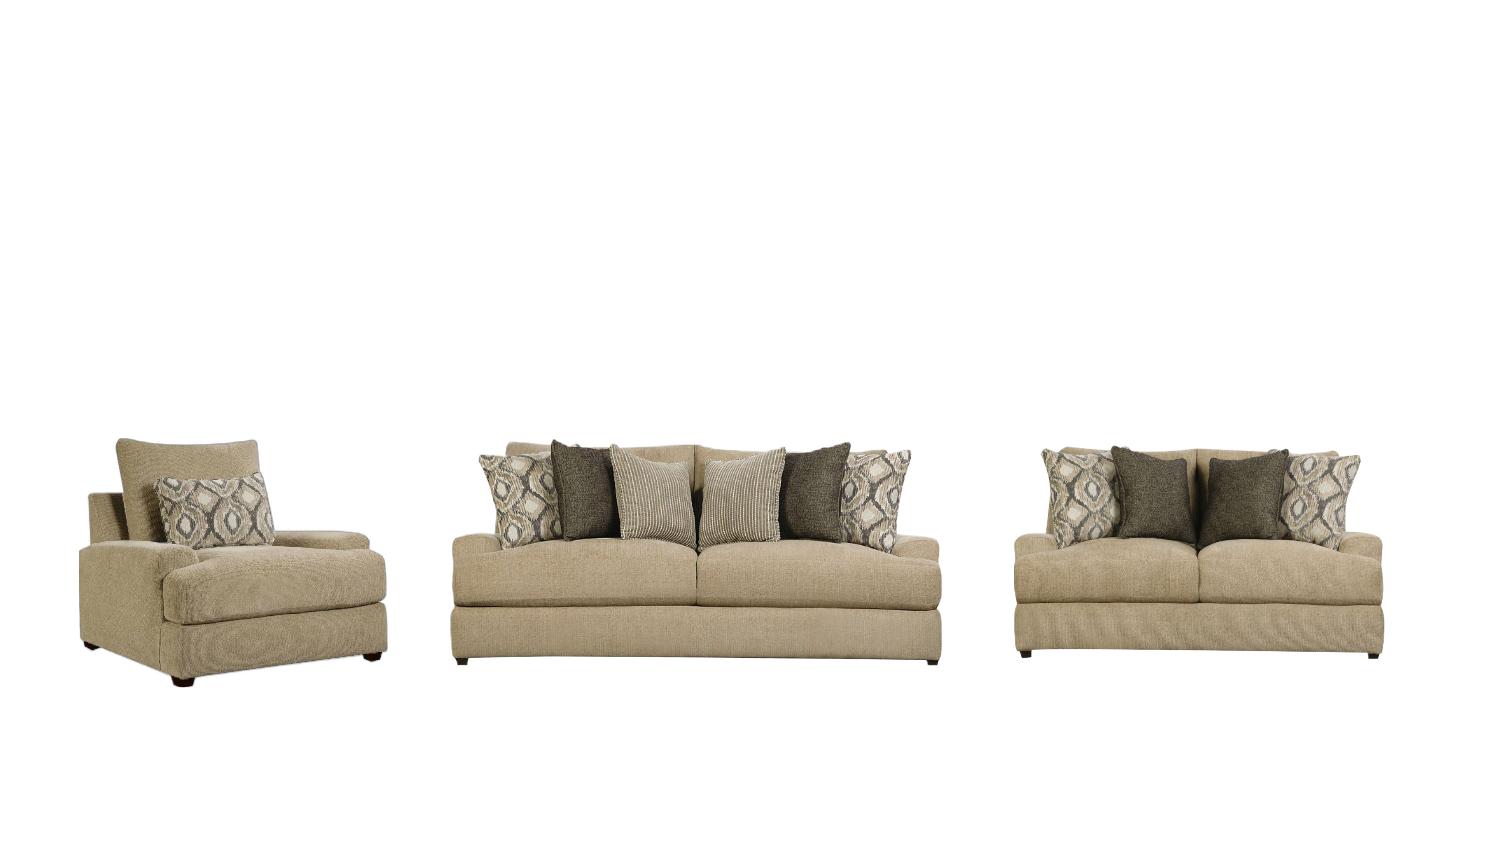 Transitional Sofa Loveseat and Chair Set Vassenia 55820-3pcs in Latte Chenille